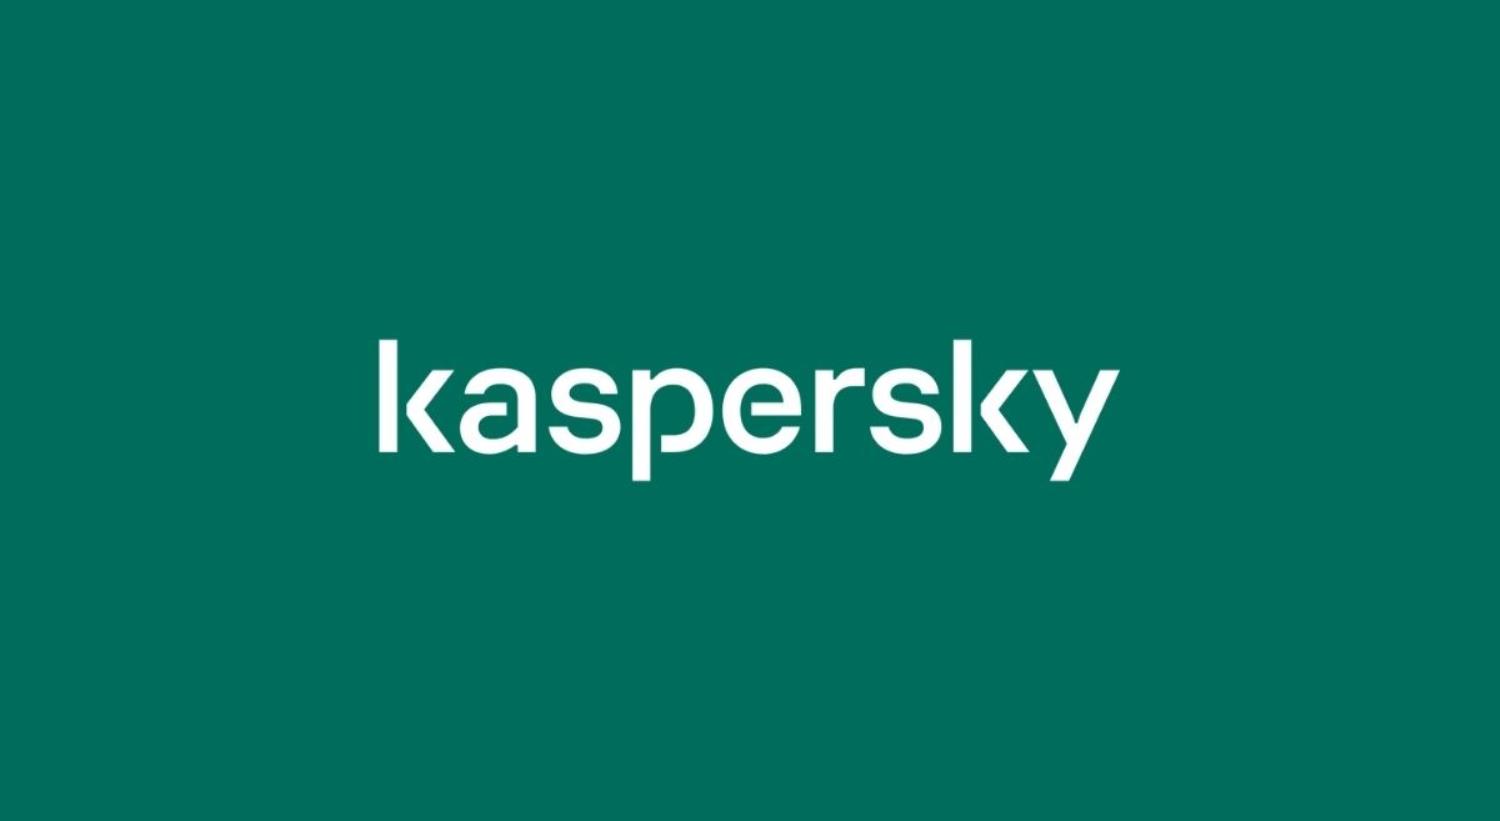 Kaspersky EDR Expert (Endpoint Detection and Response)